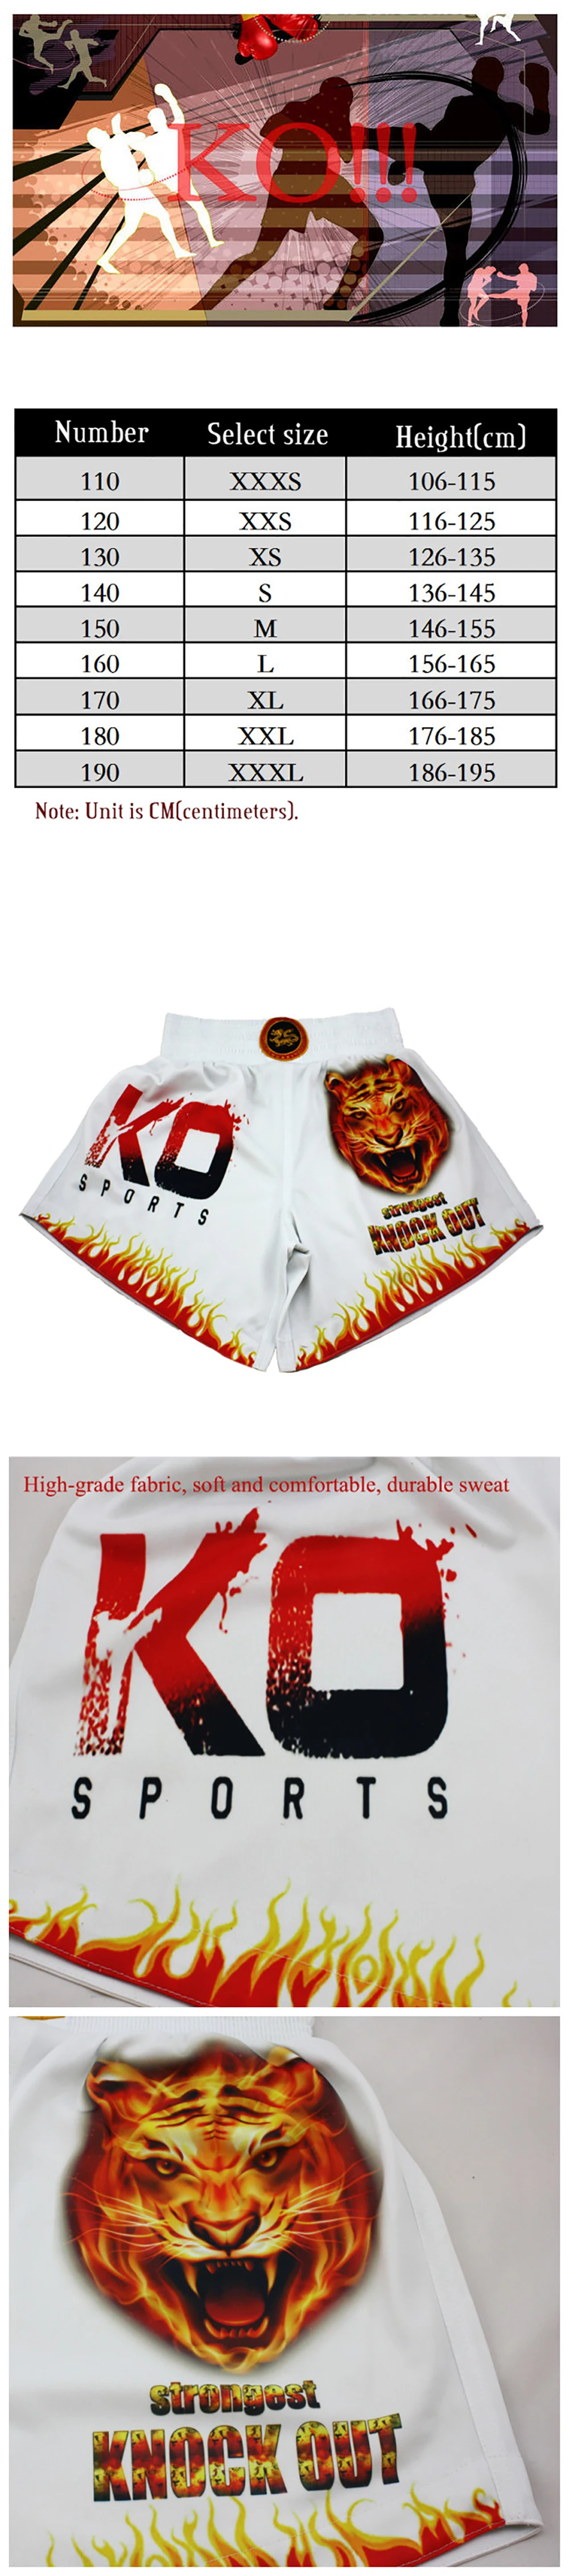 HX15 одежда для занятий тайским боксом, тренировочная одежда для занятий боксом, дышащие шорты для занятий тайским боксом, шорты для тайского бокса, ММА